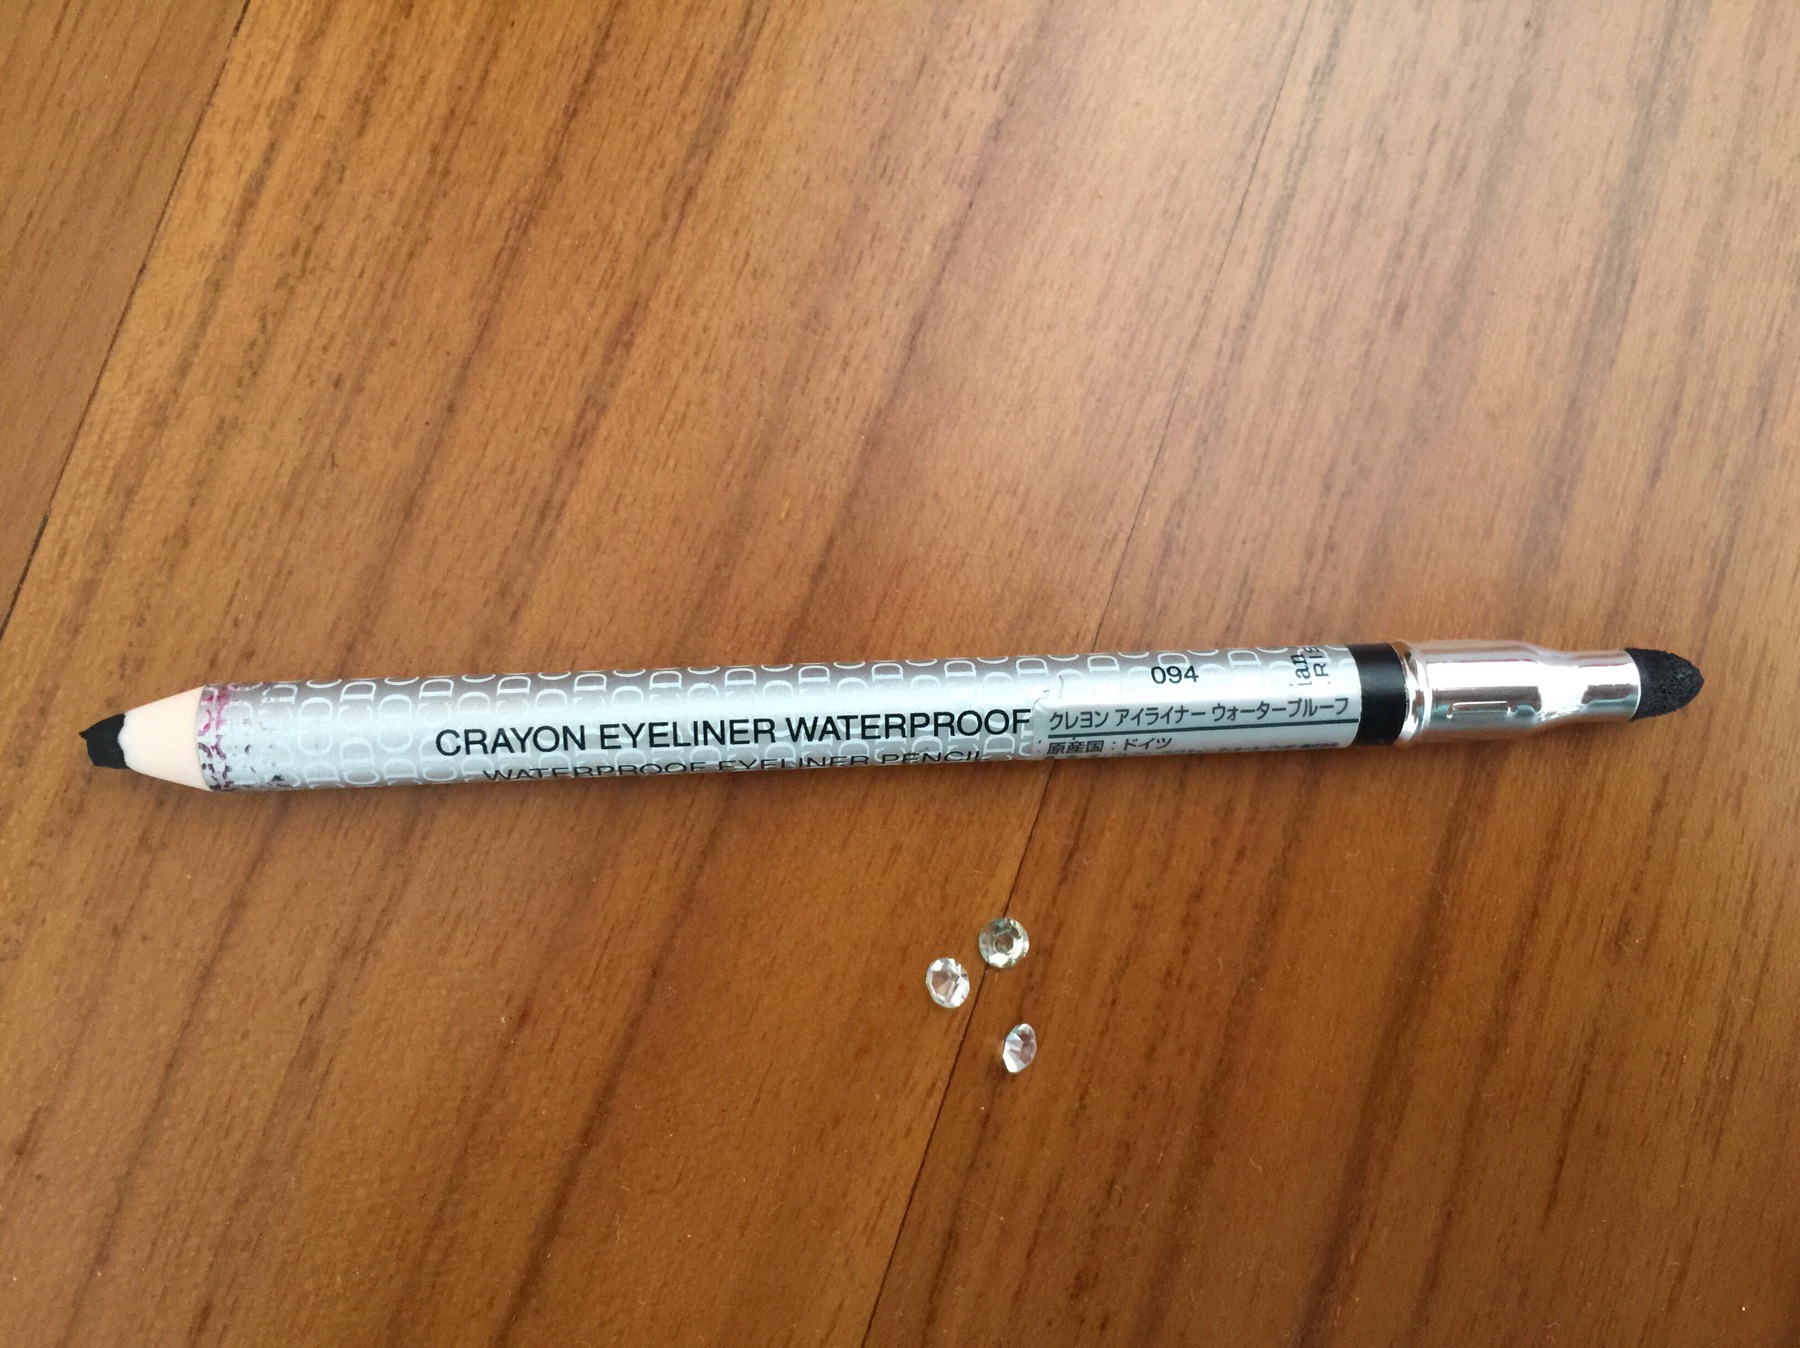 dior crayon eyeliner waterproof review